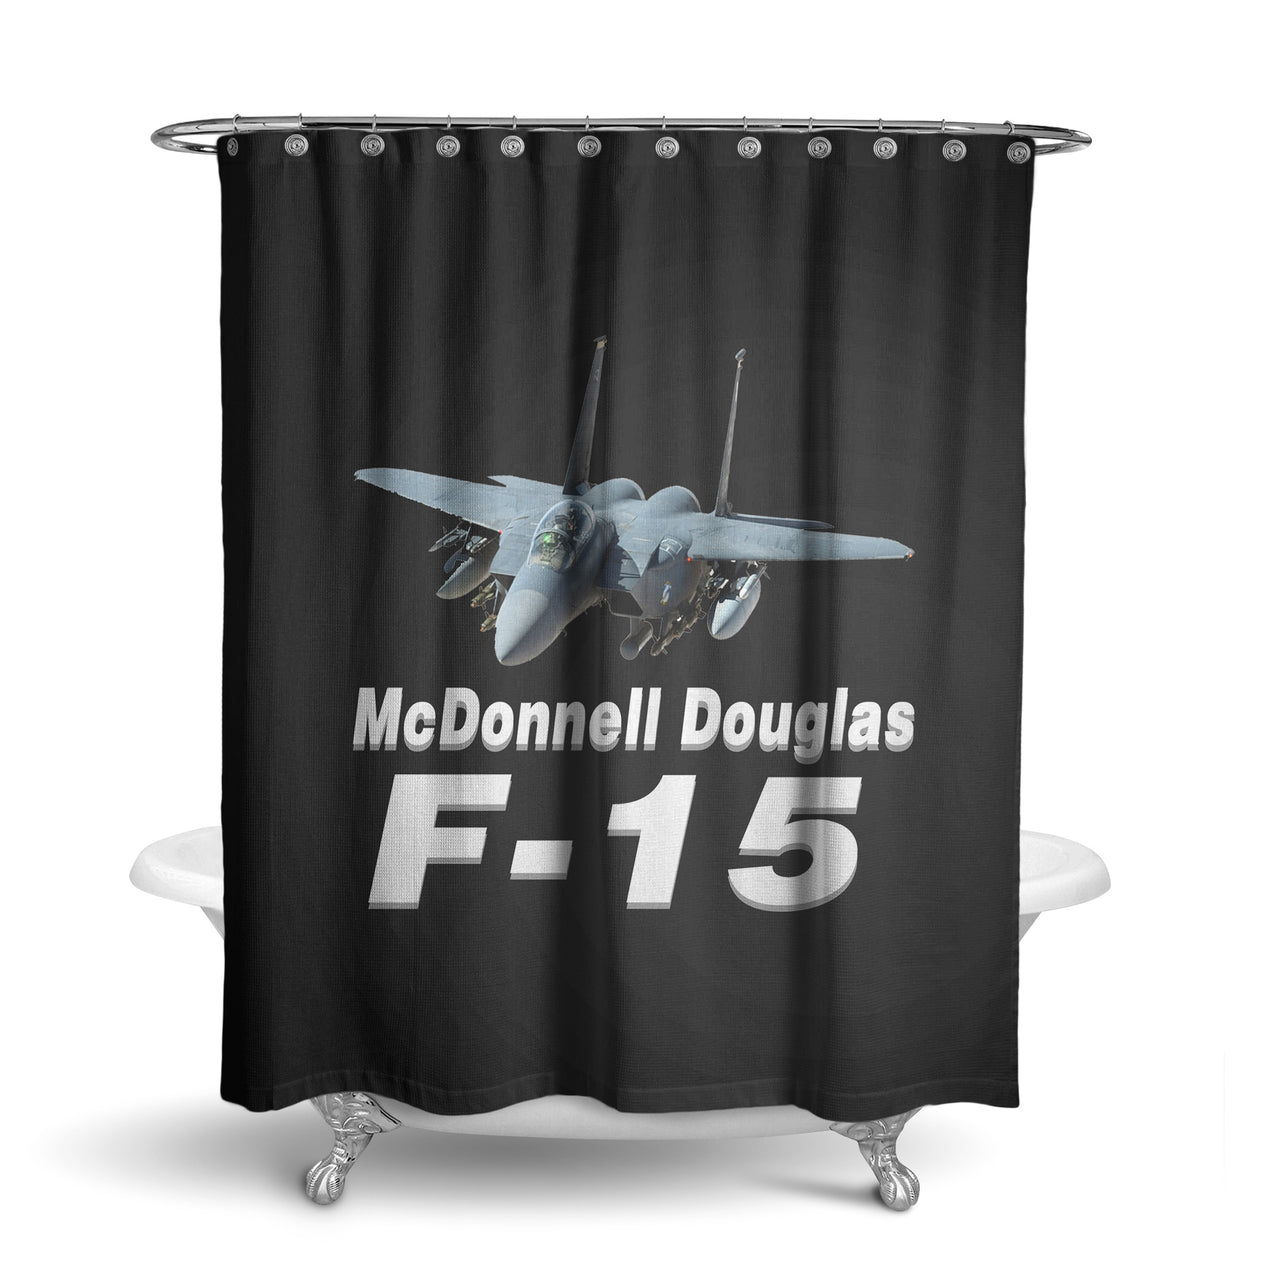 The McDonnell Douglas F15 Designed Shower Curtains